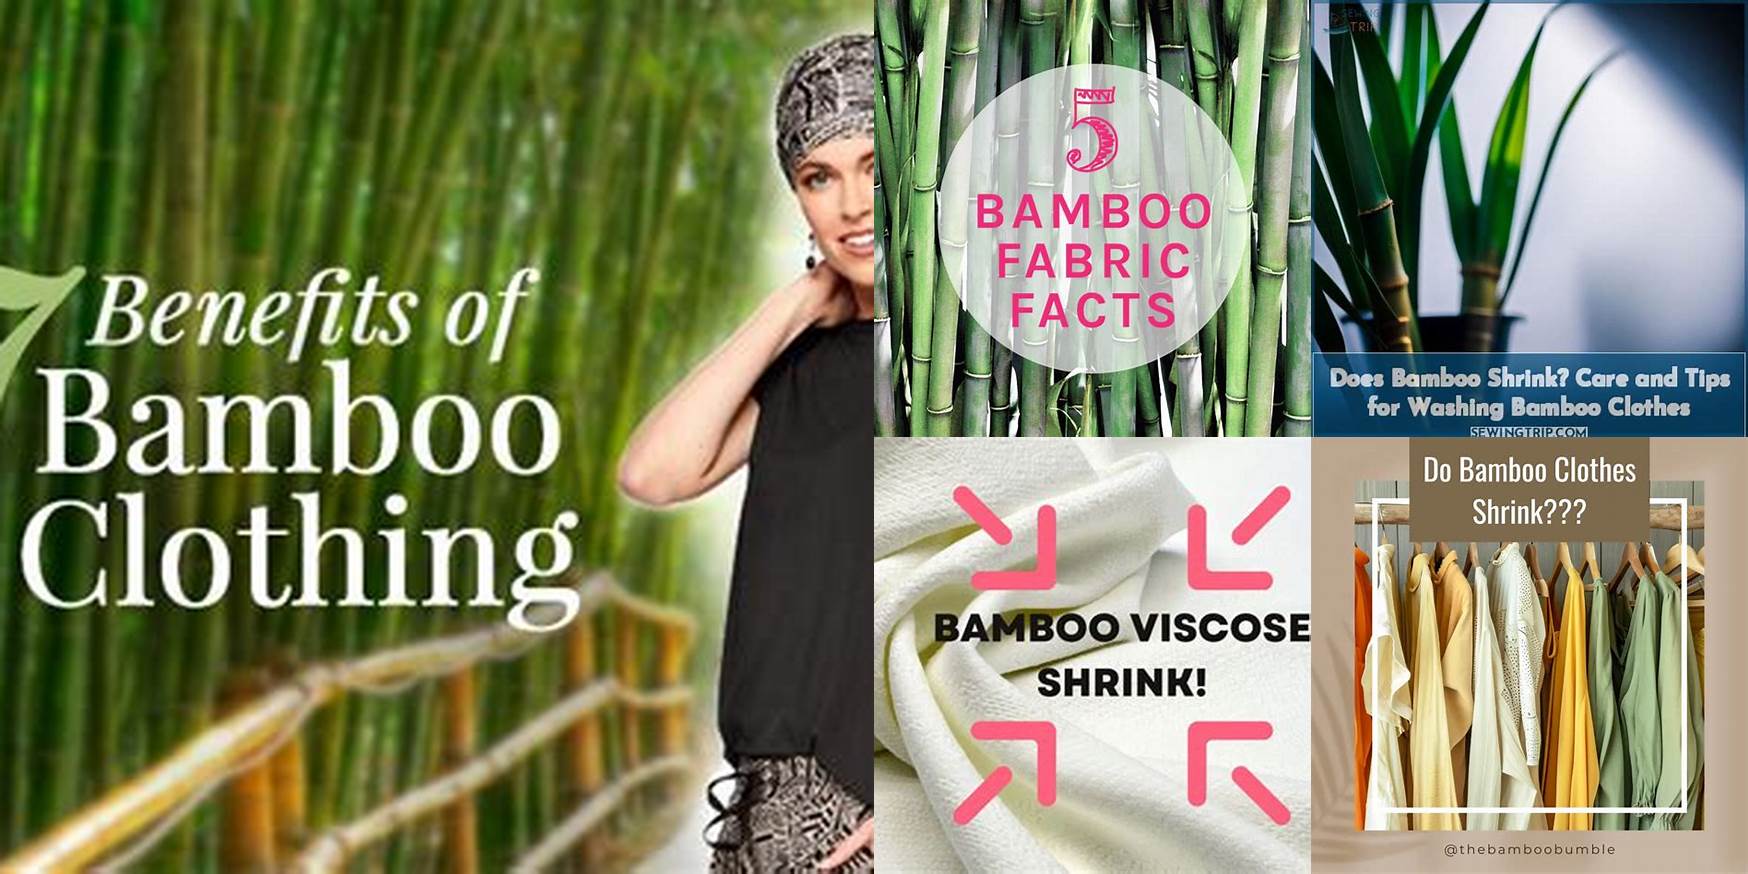 Does Bamboo Clothing Shrink